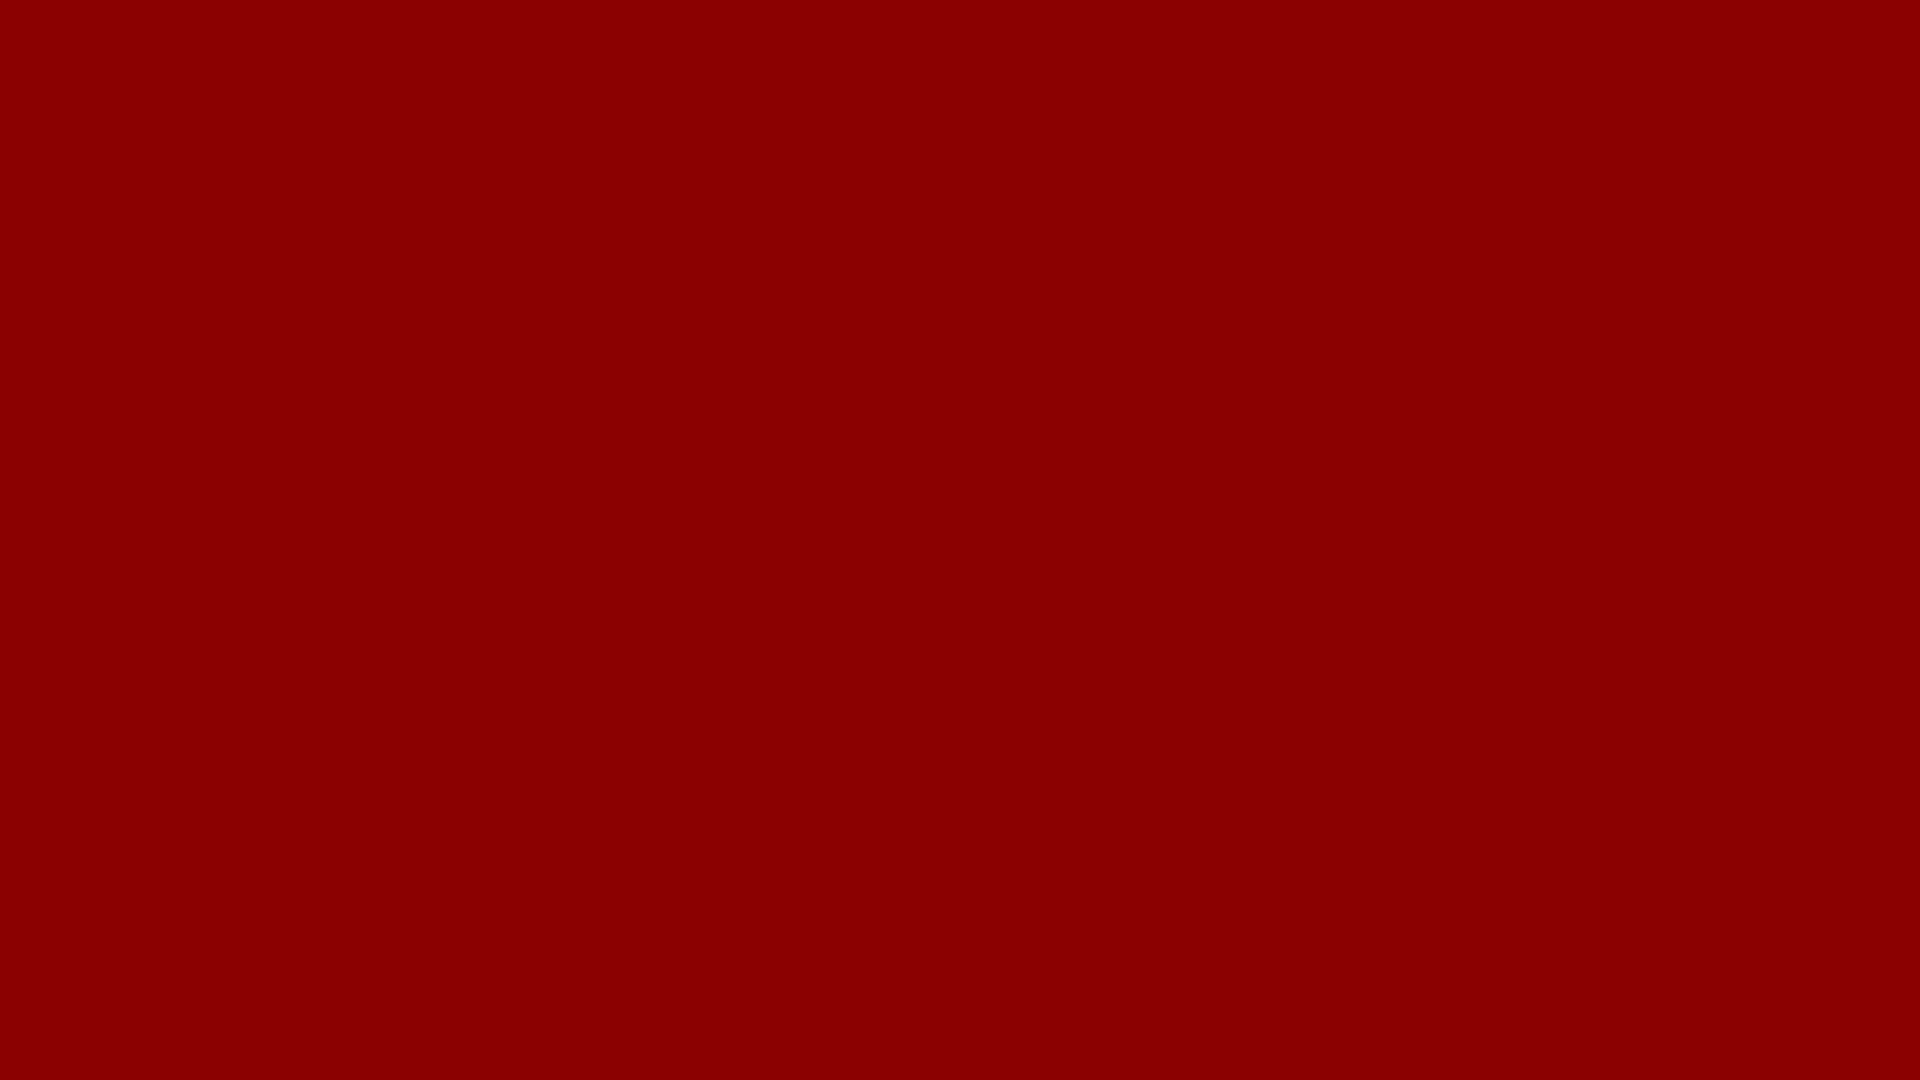 [43+] Red Wallpaper Background 1920x1080 on WallpaperSafari